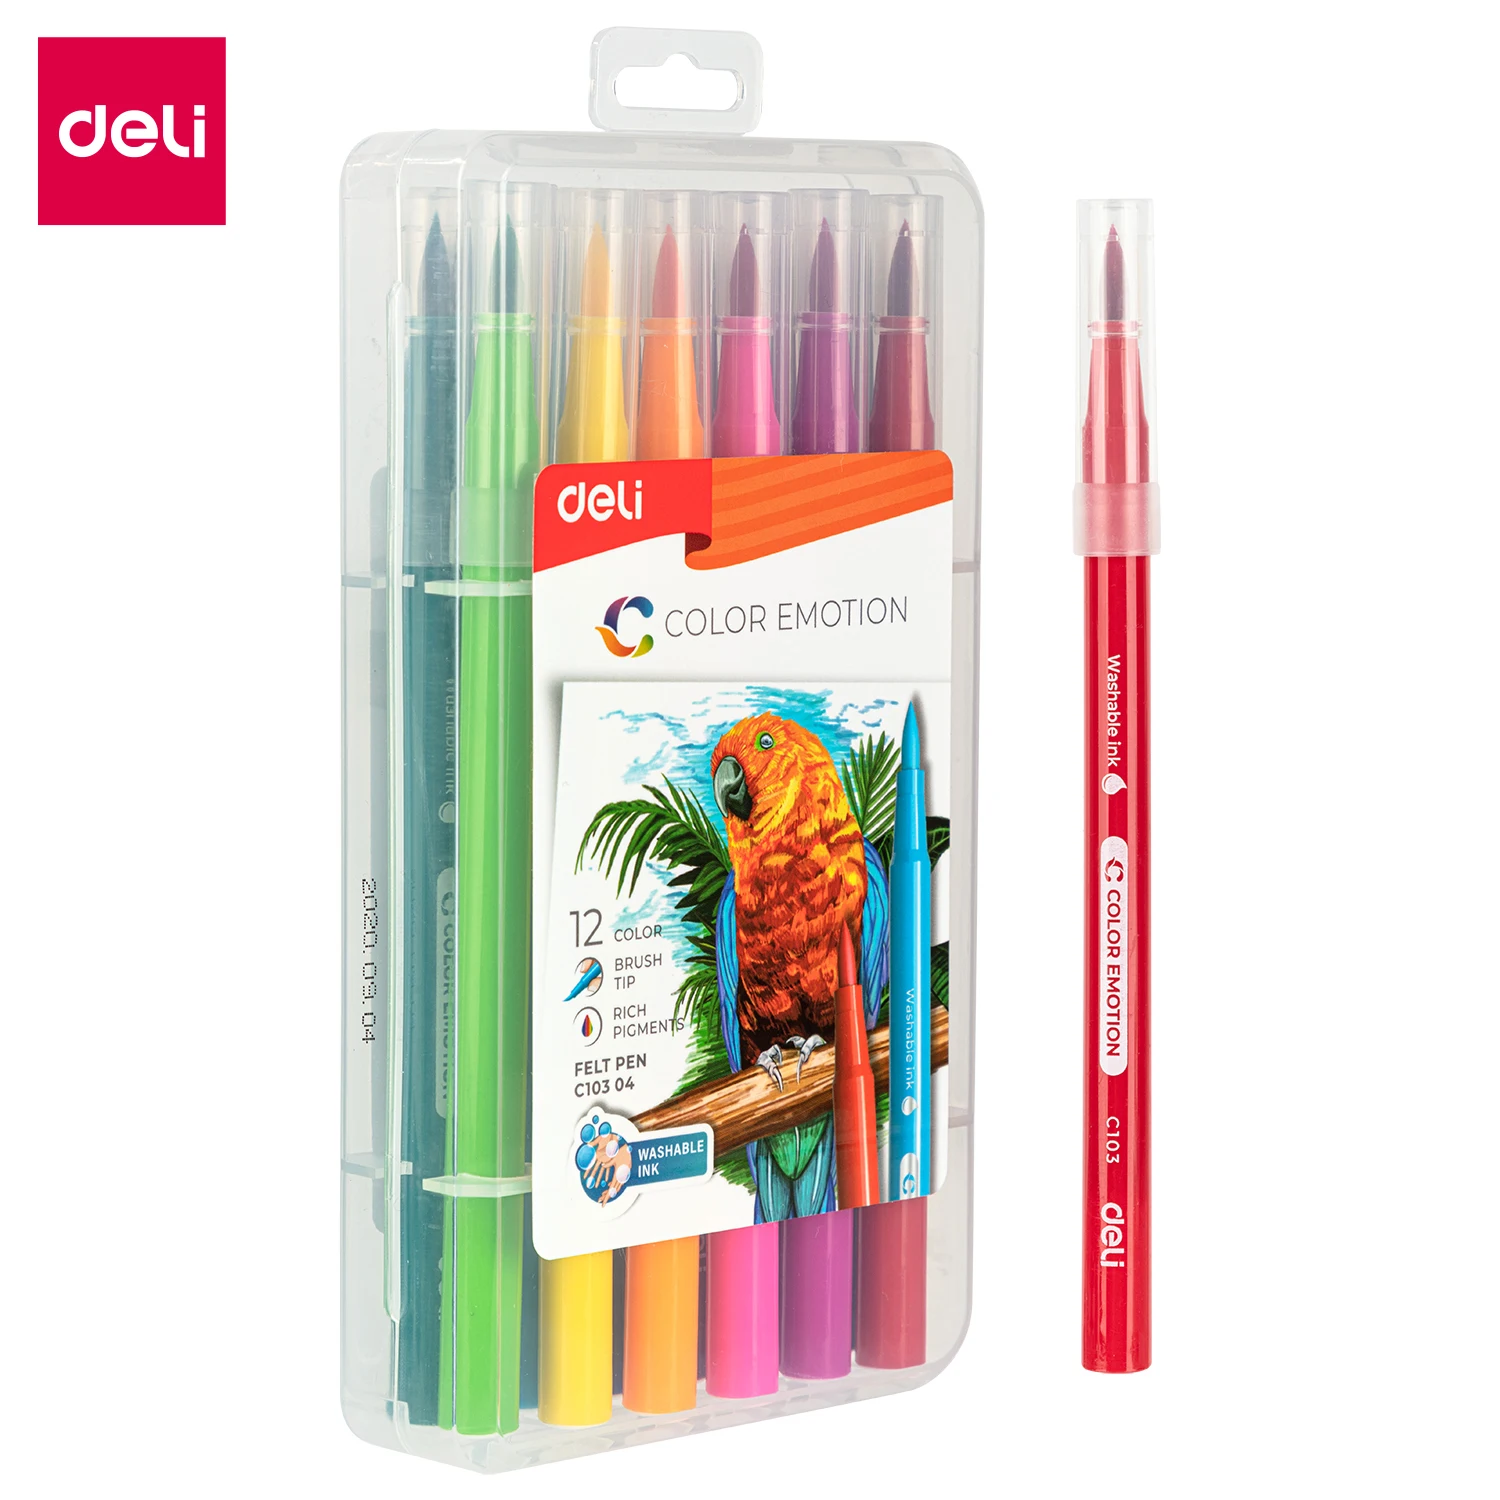 

Deli Felt Pen 12/24 Colors School Supplies Stationery Colored Pen for Kids Students